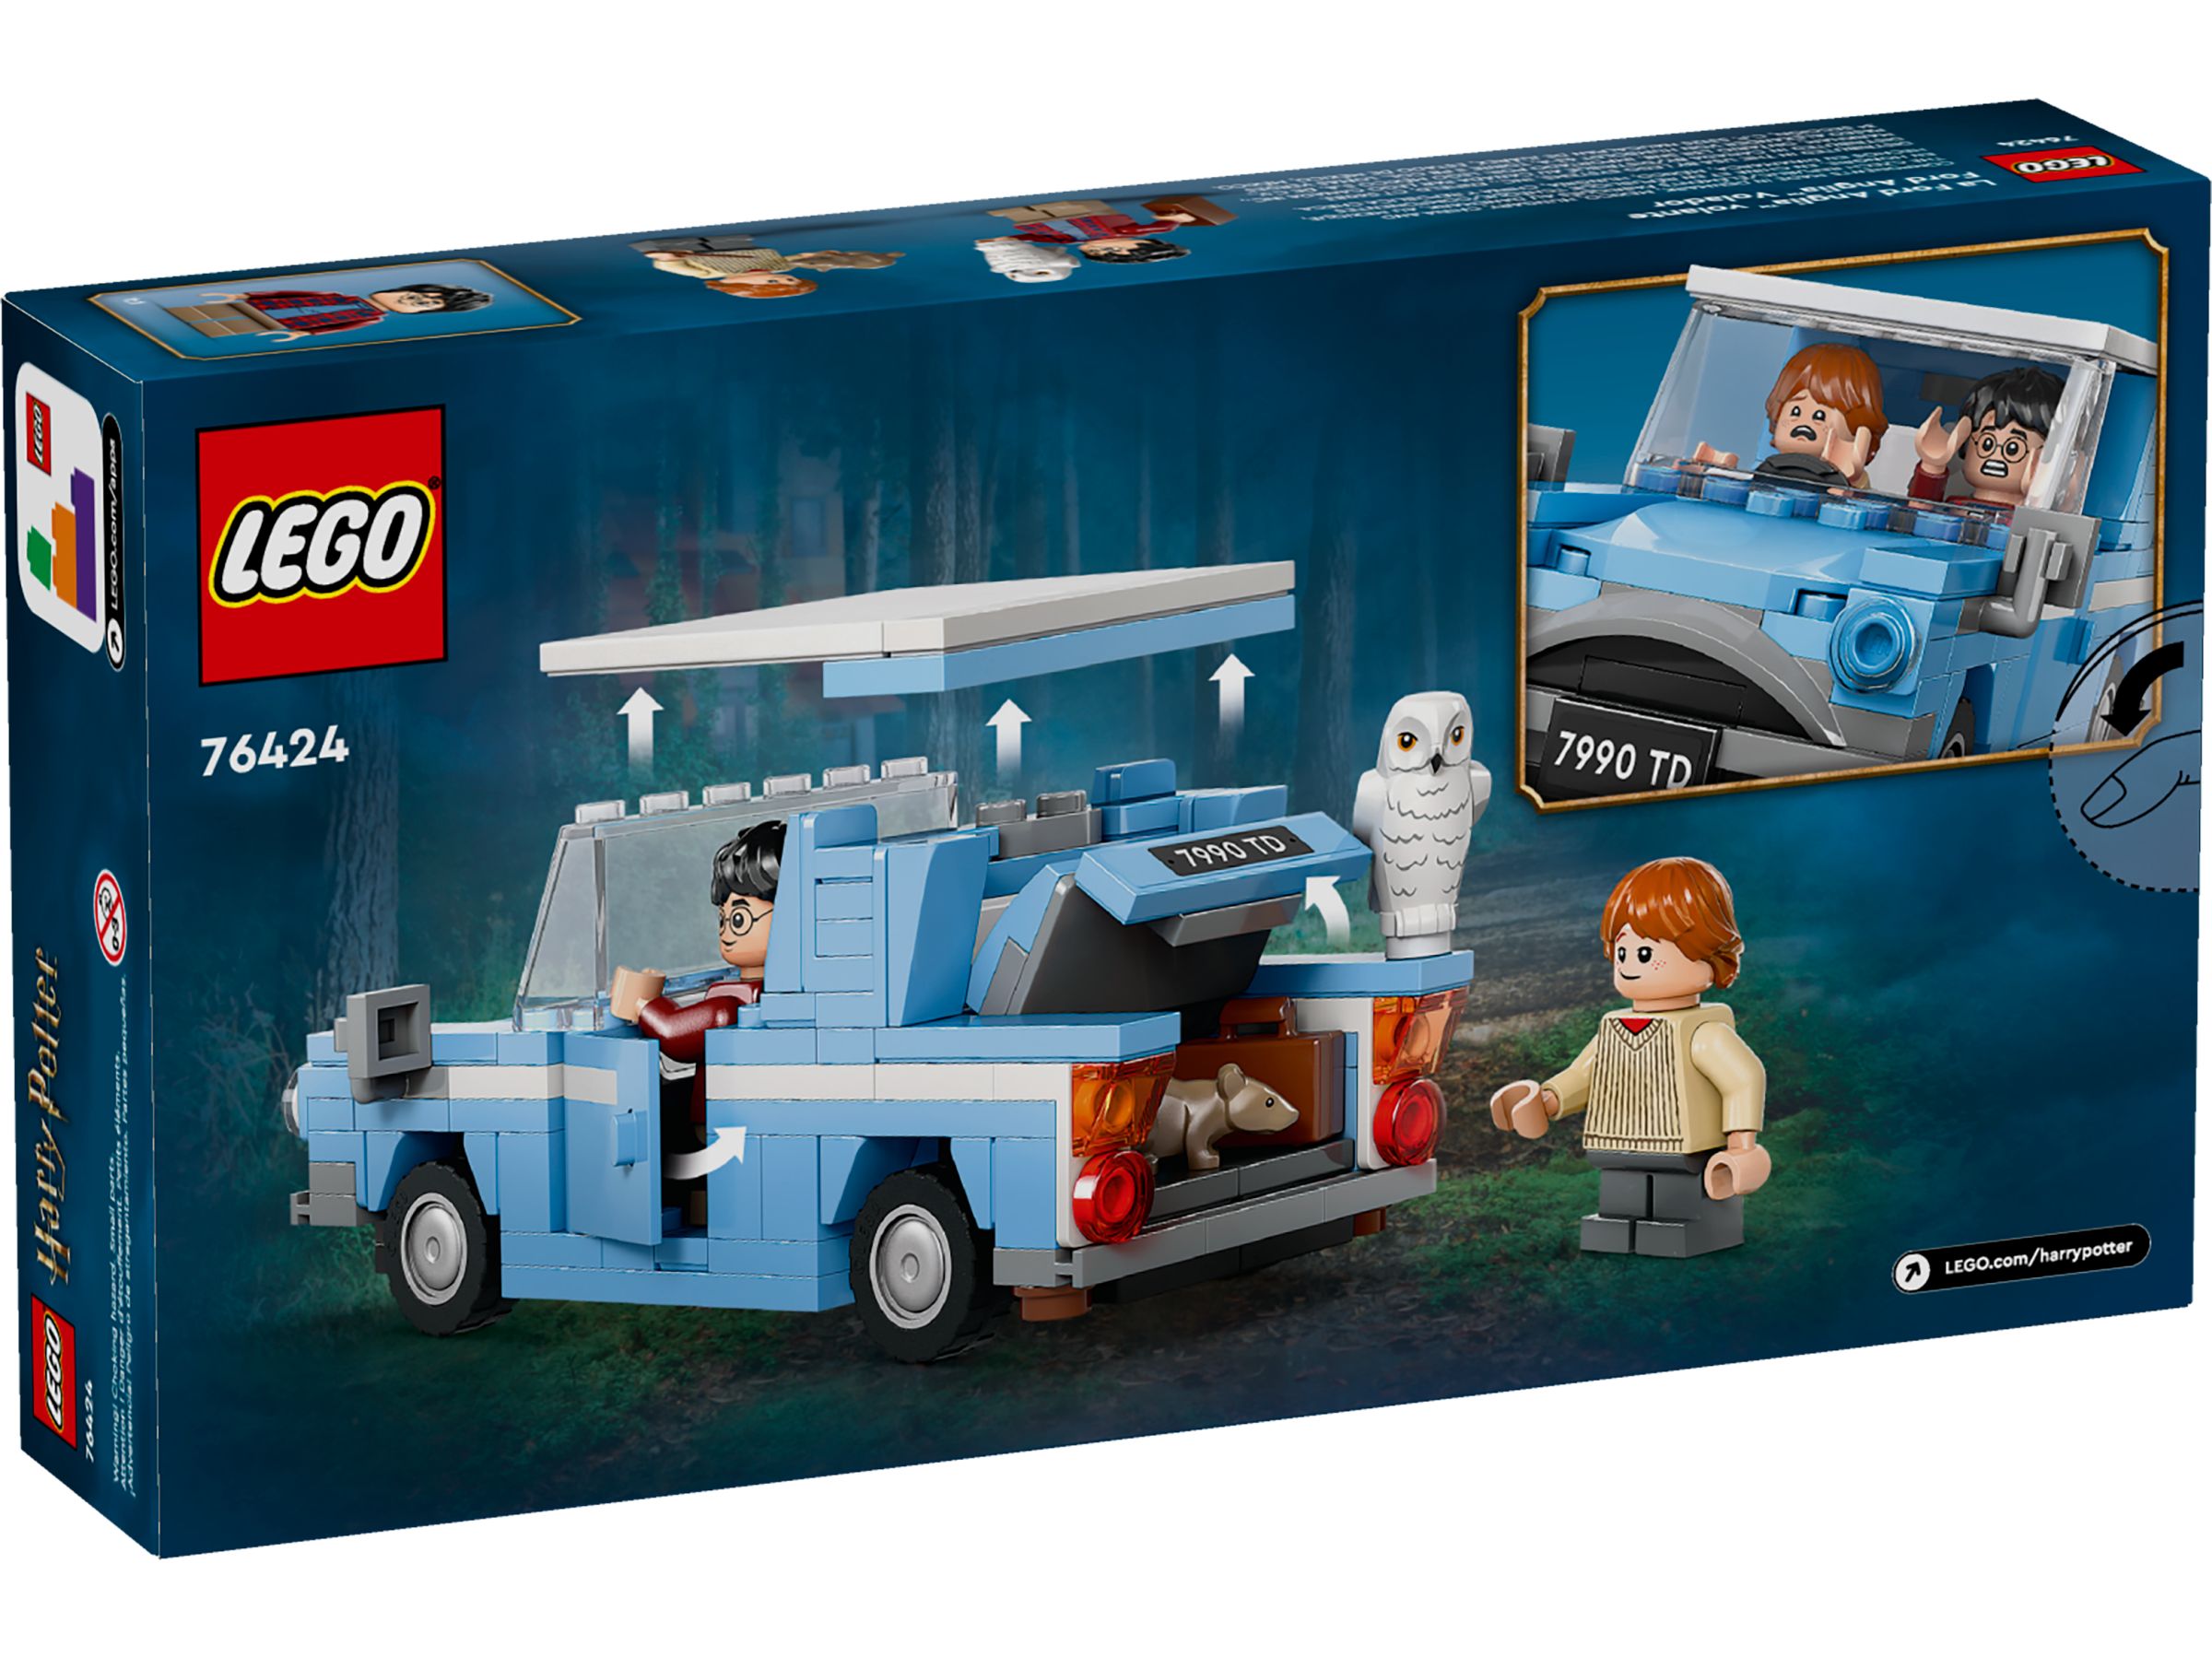 LEGO Harry Potter 76424 Fliegender Ford Anglia™ LEGO_76424_Box5_v39.jpg